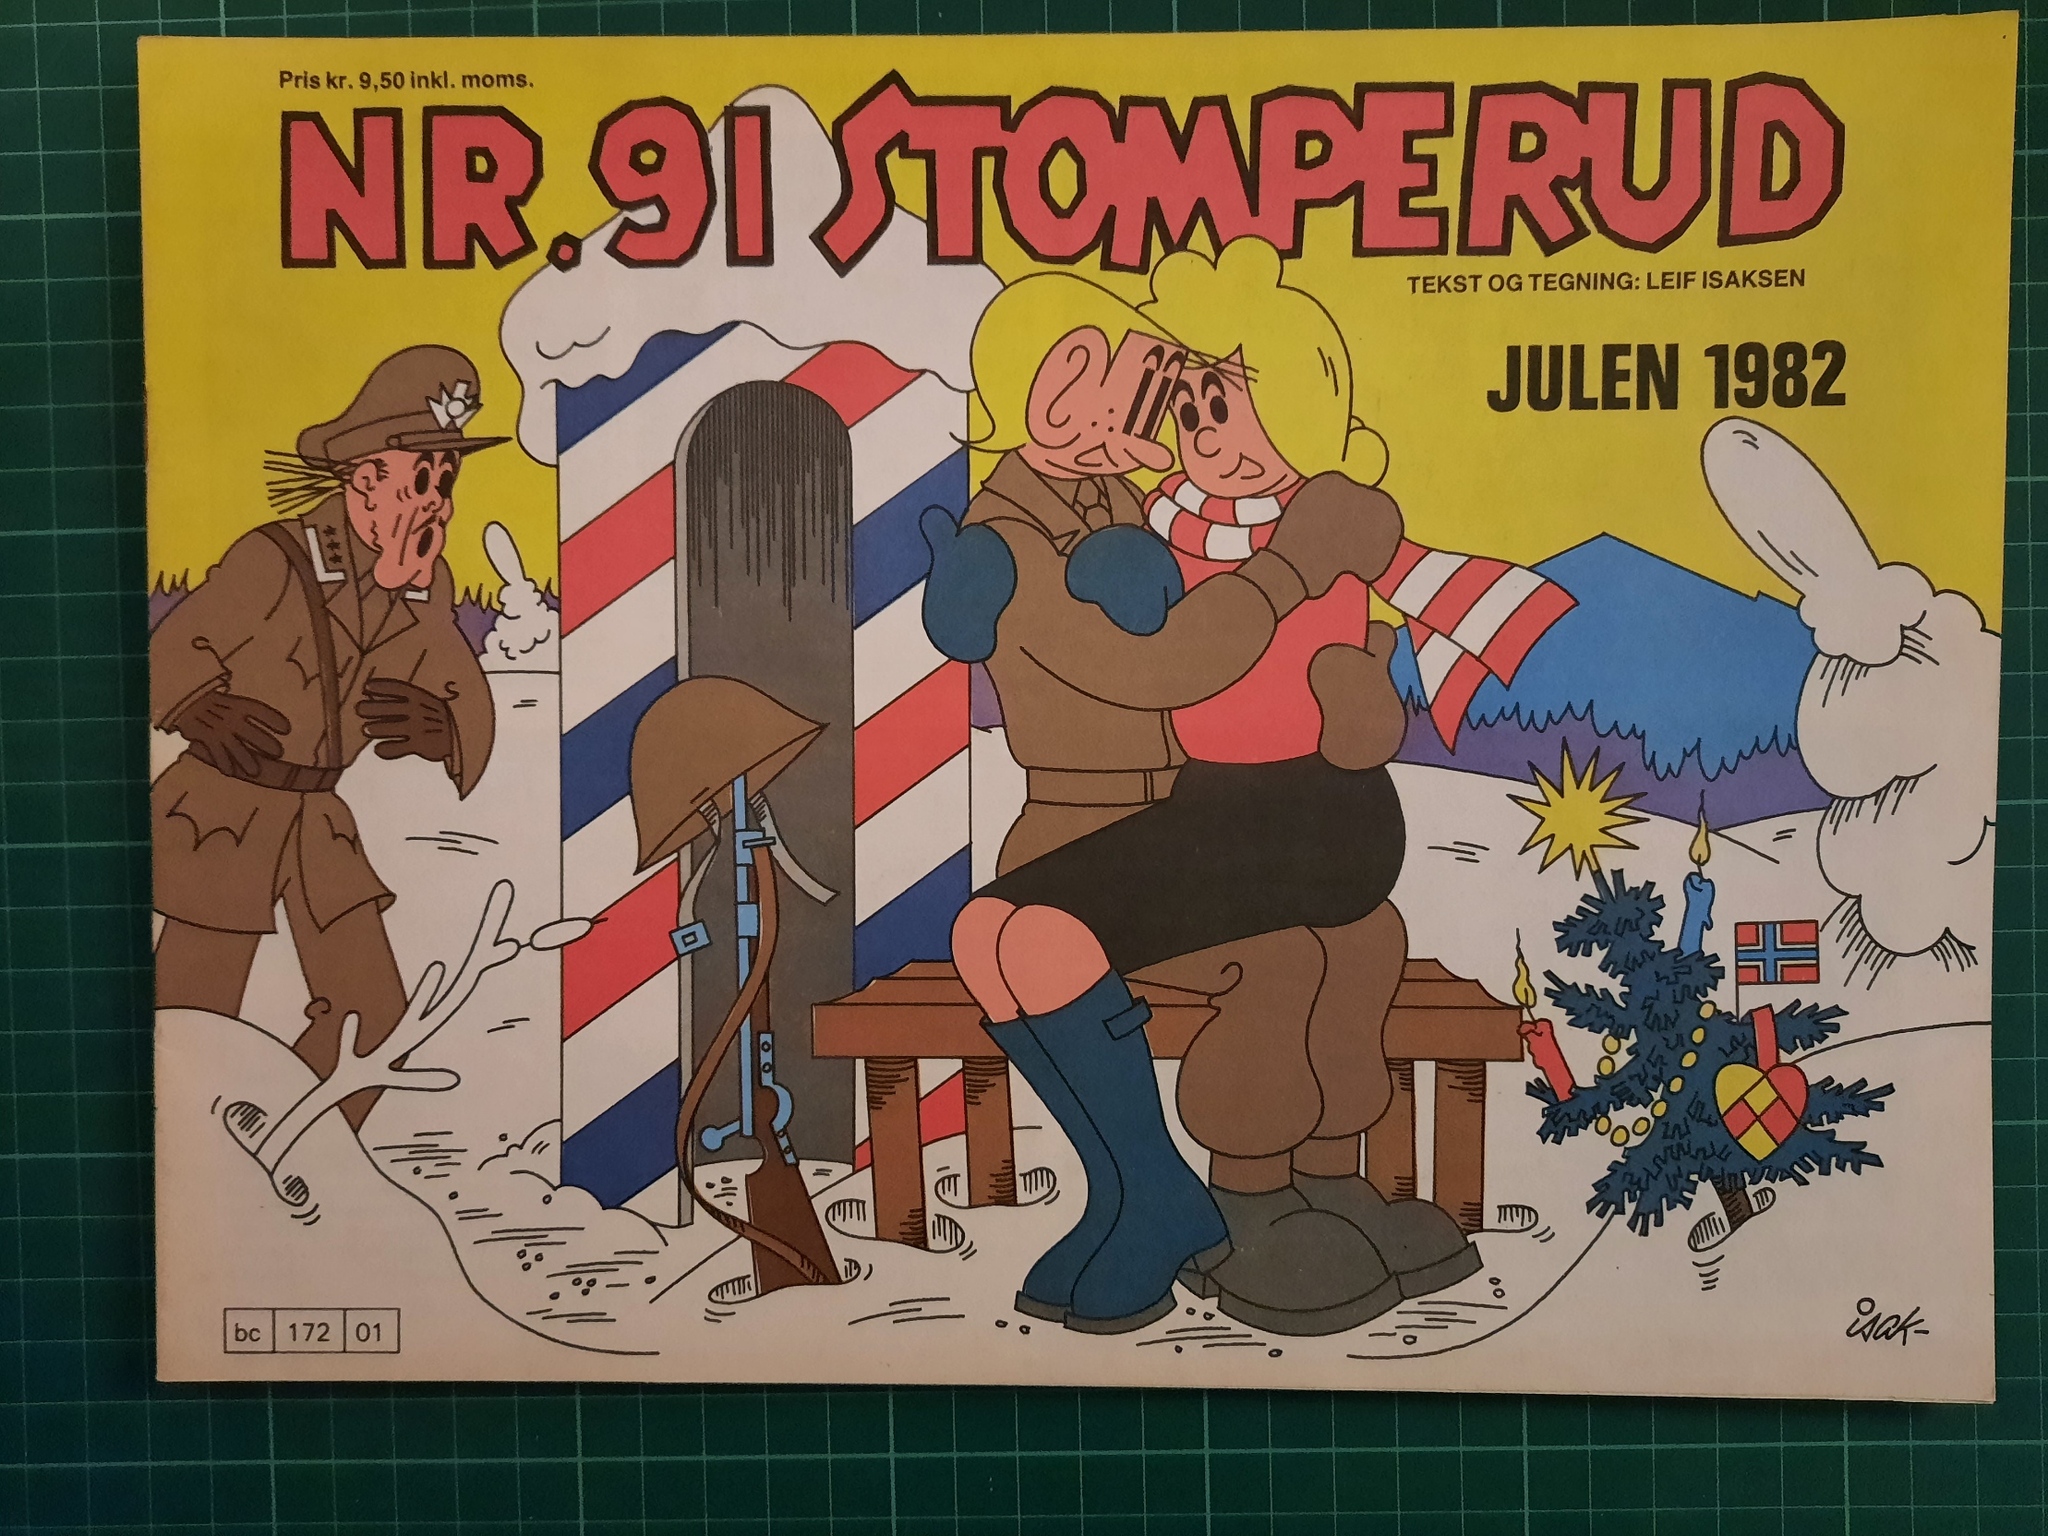 Nr. 91 Stomperud 1982